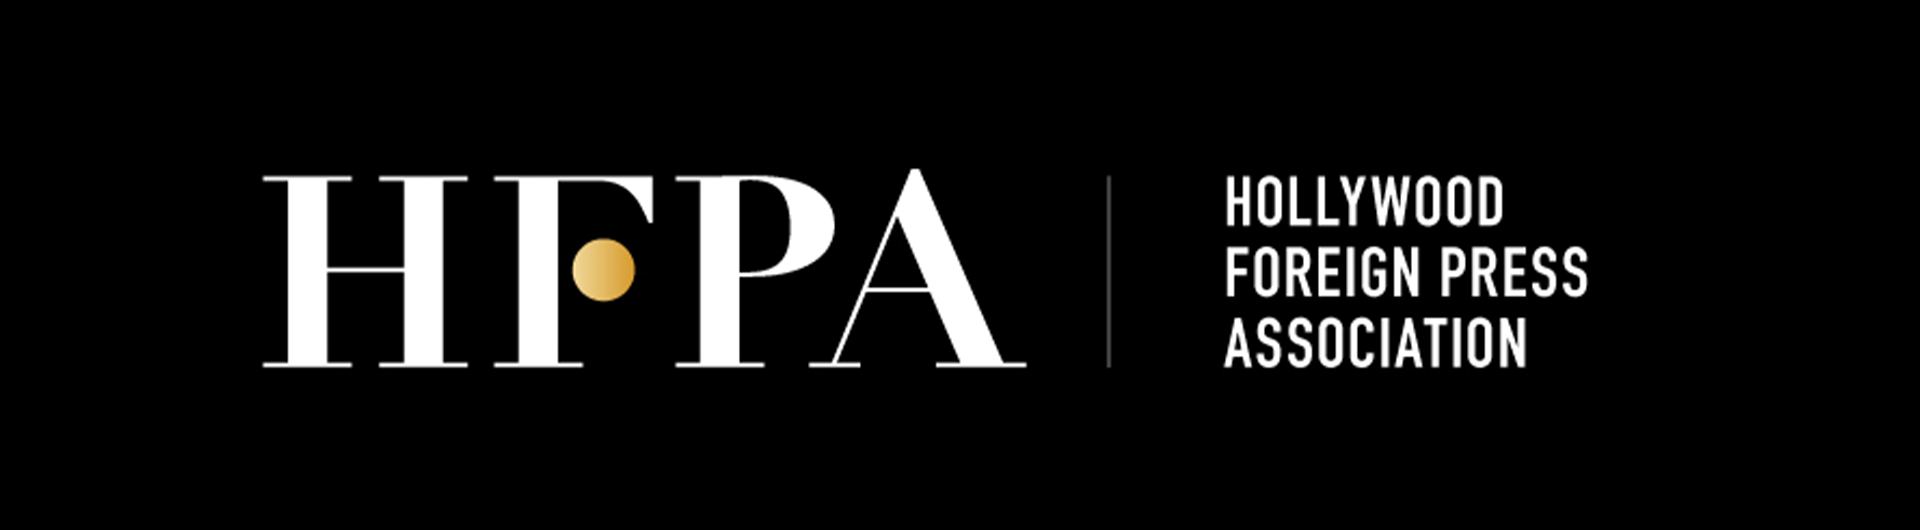 HFPA Banner